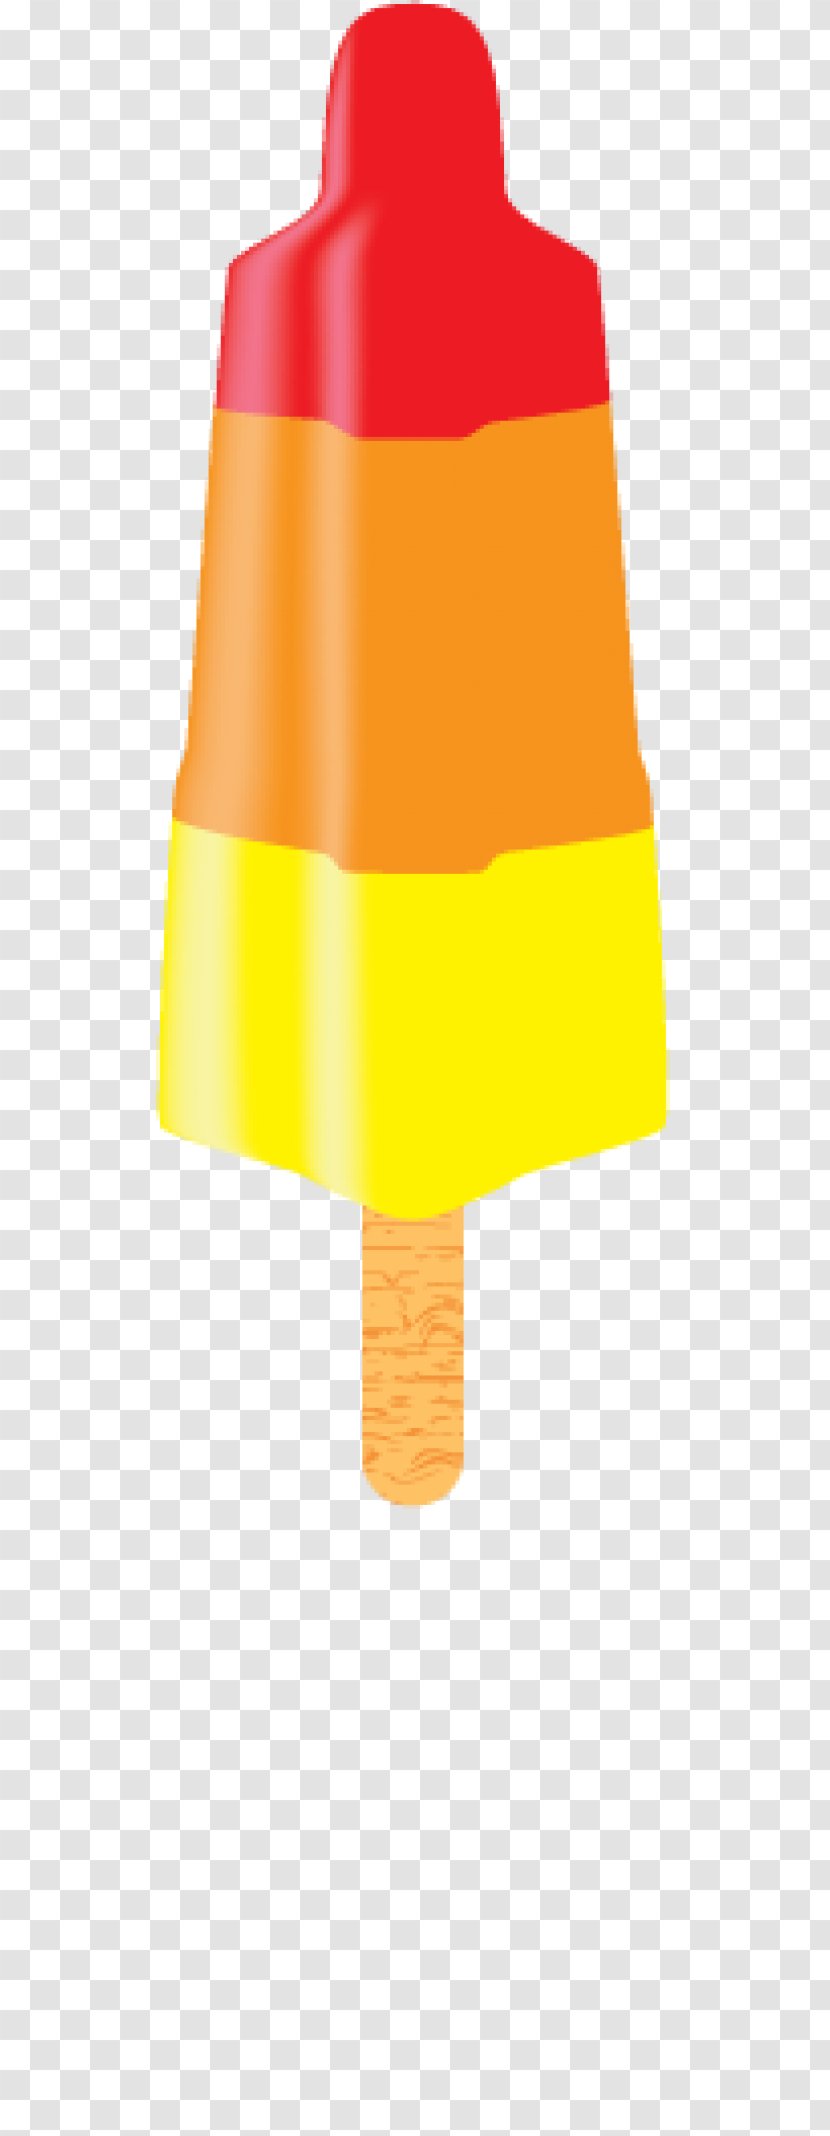 Ice Cream Cones Pop Lollipop - Popsicle Transparent PNG